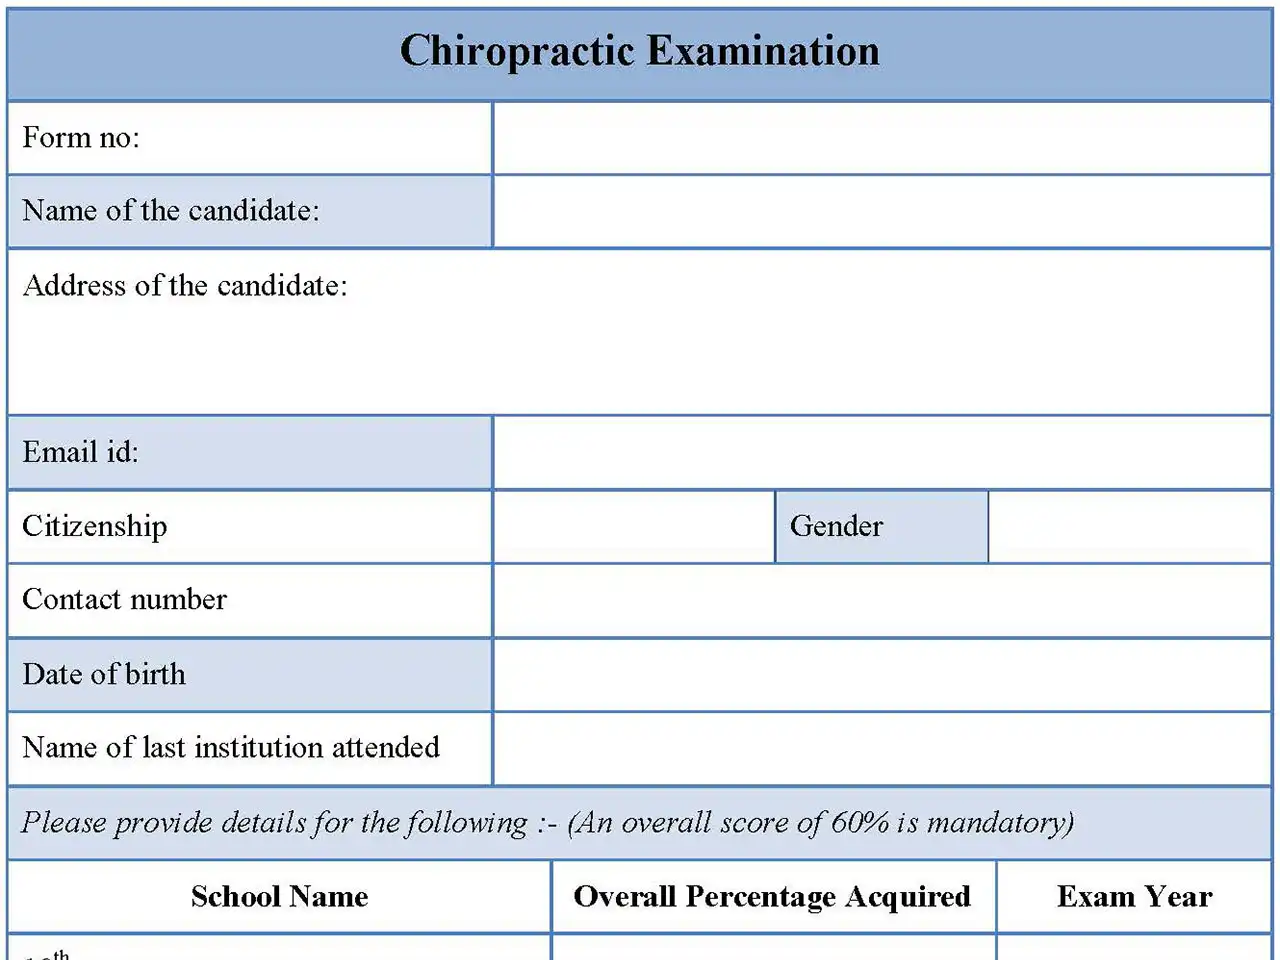 Chiropractic Examination form